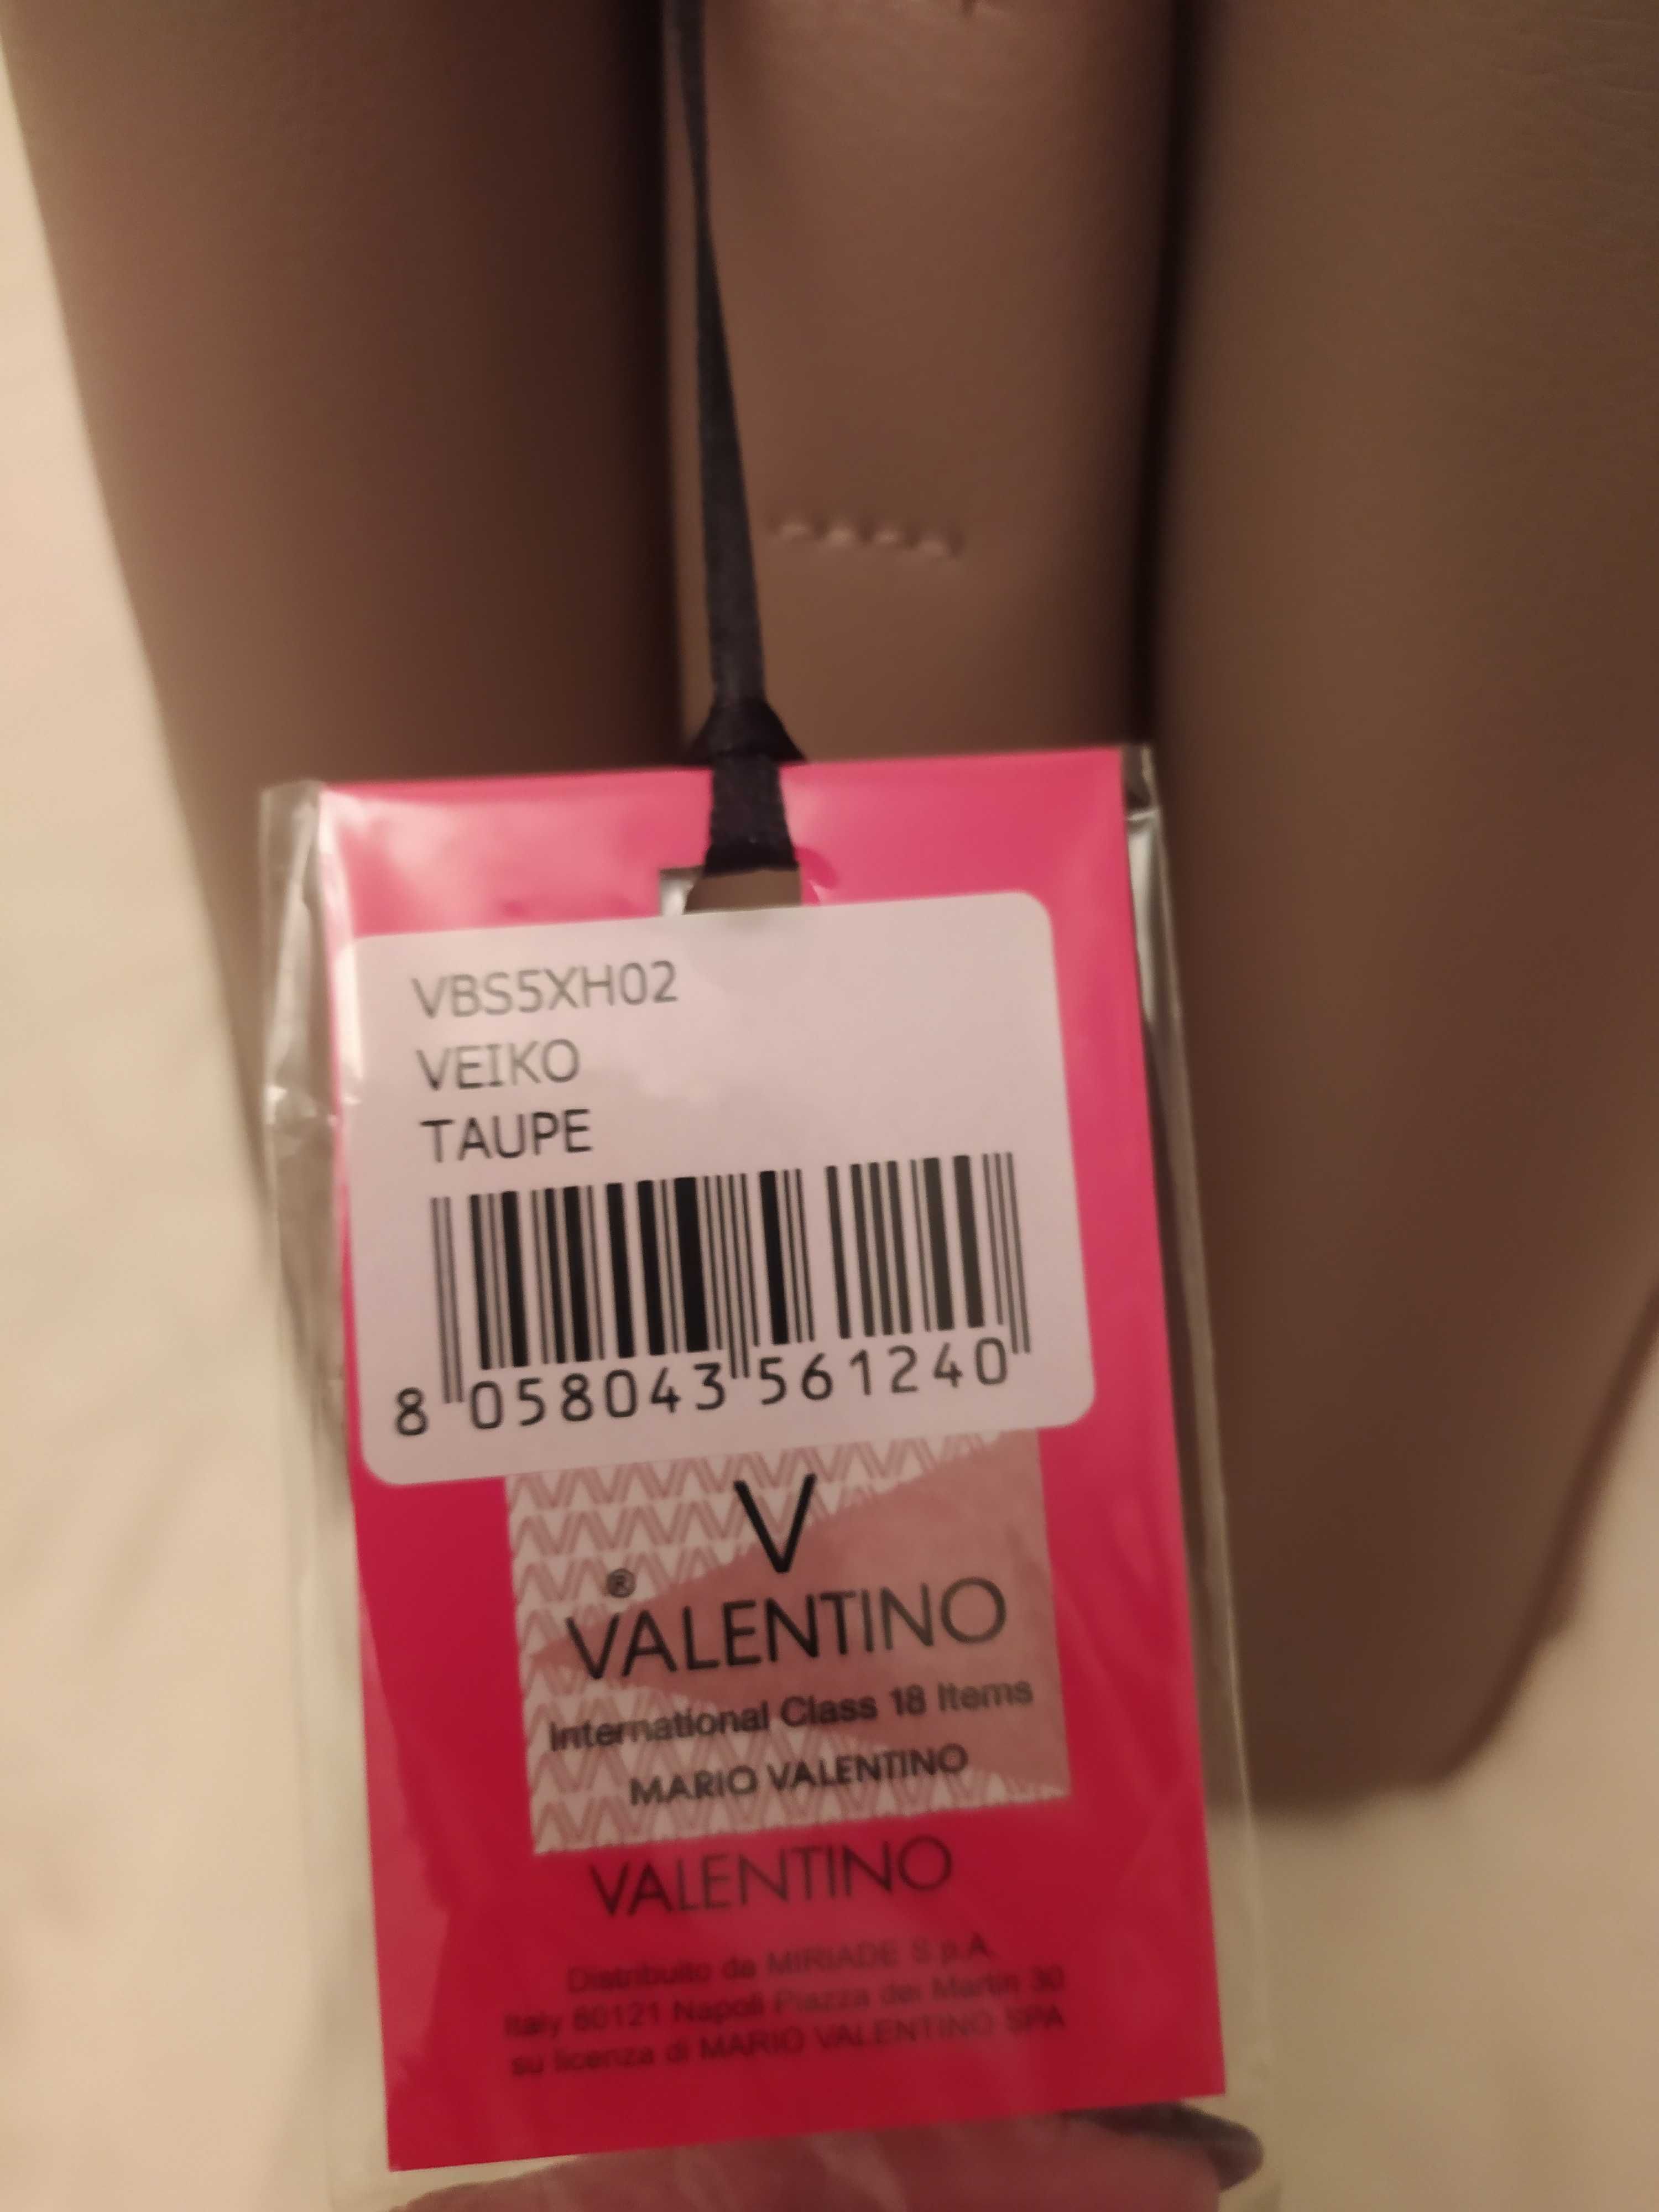 Beżowa Nowa torebka Valentino vbs5xh02 Veiko taupe kremowa torebka